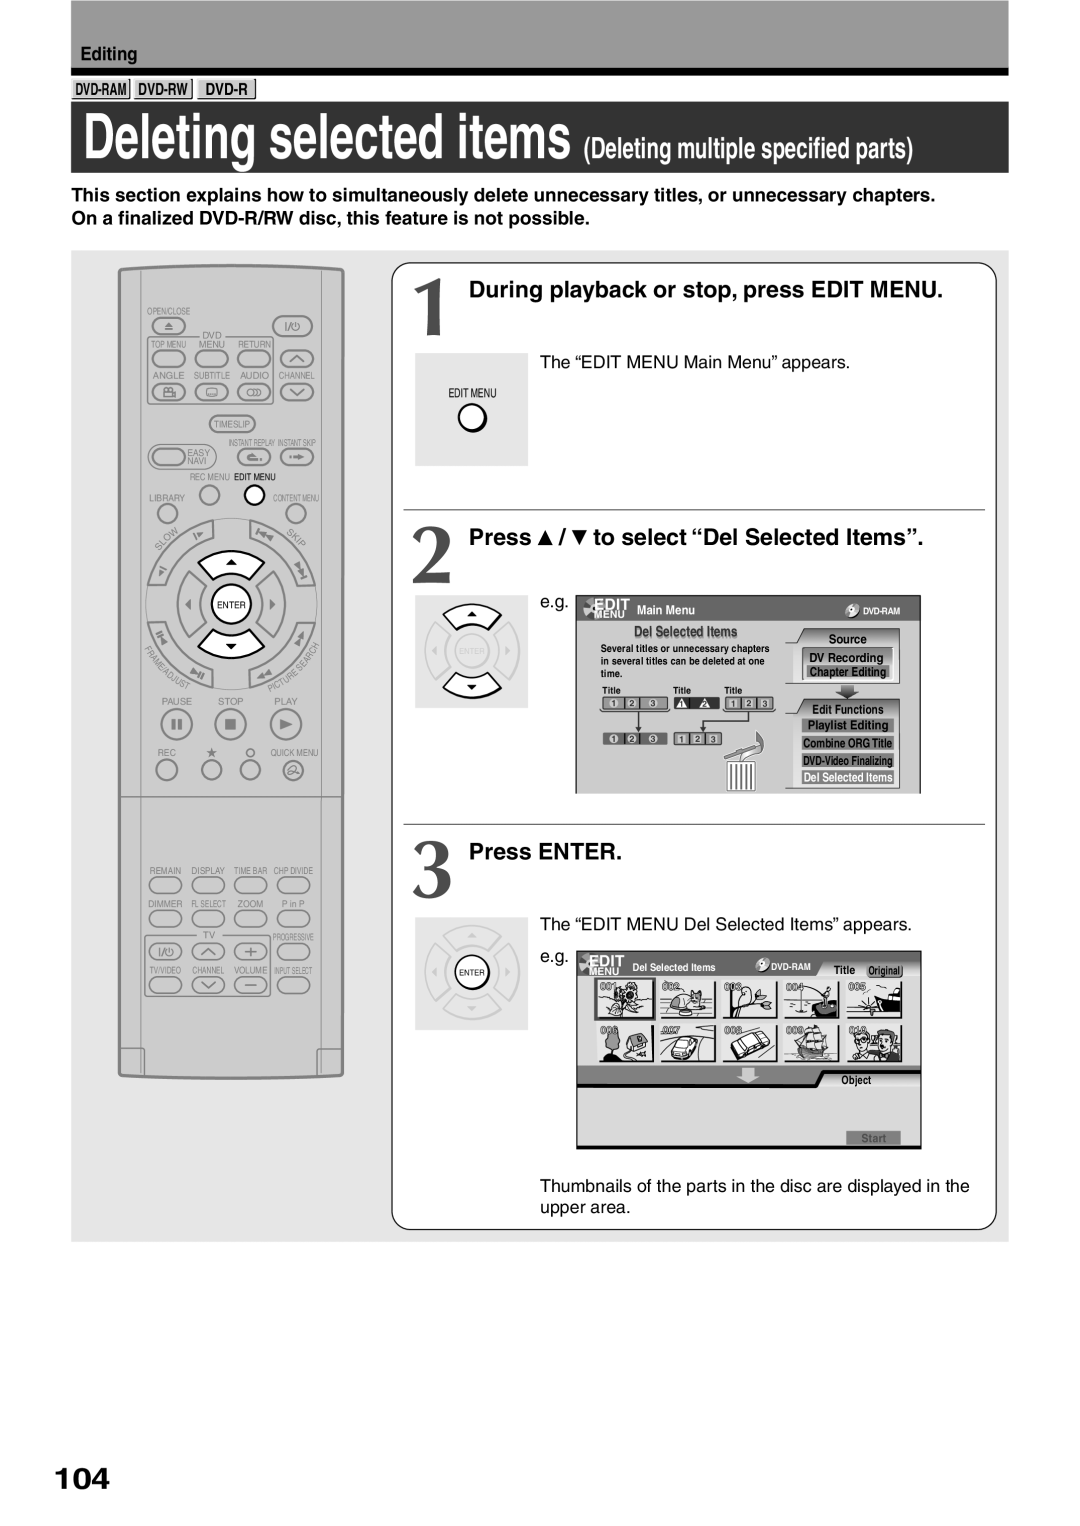 Toshiba D-KR2SU During playback or stop, press EDIT MENU, Press / to select “Del Selected Items”, Press ENTER, Editing 